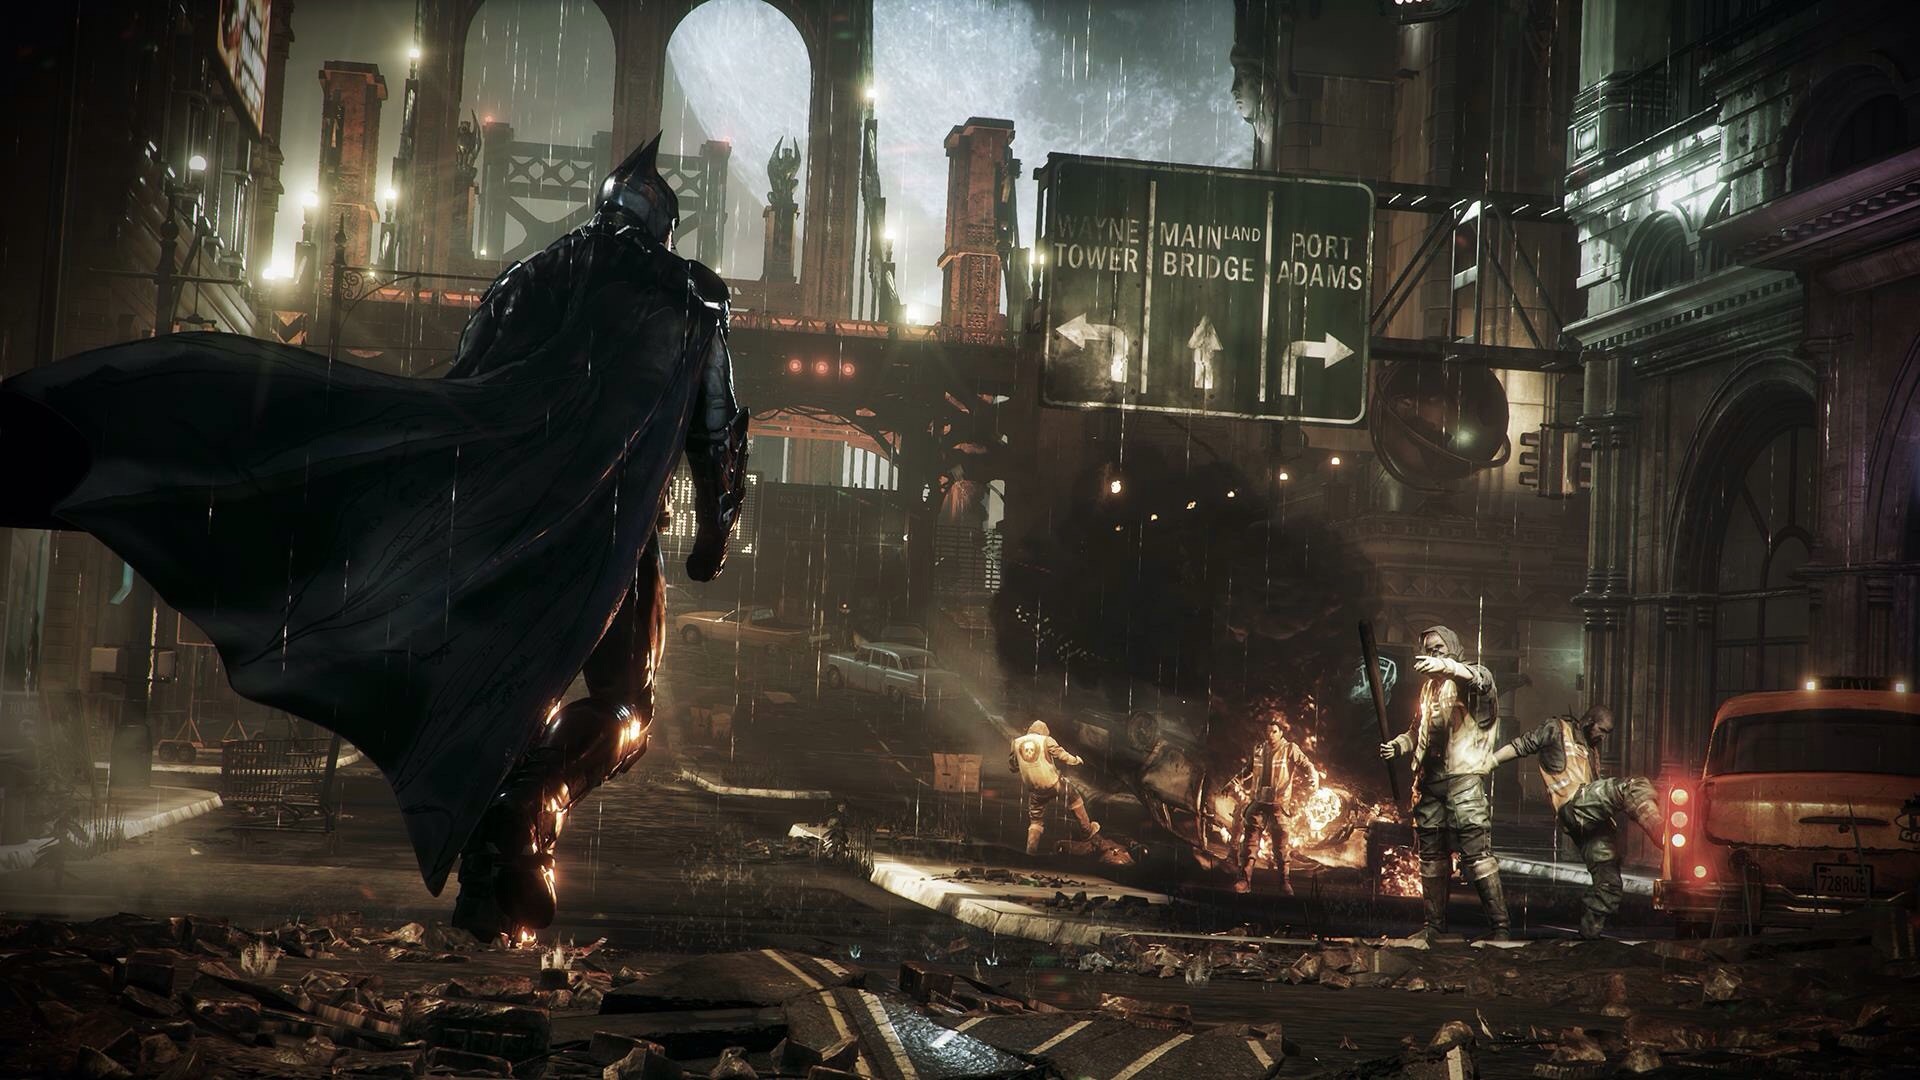 General 1920x1080 Batman Gotham City Batman: Arkham Knight fire street building smoke taxi video games PC gaming